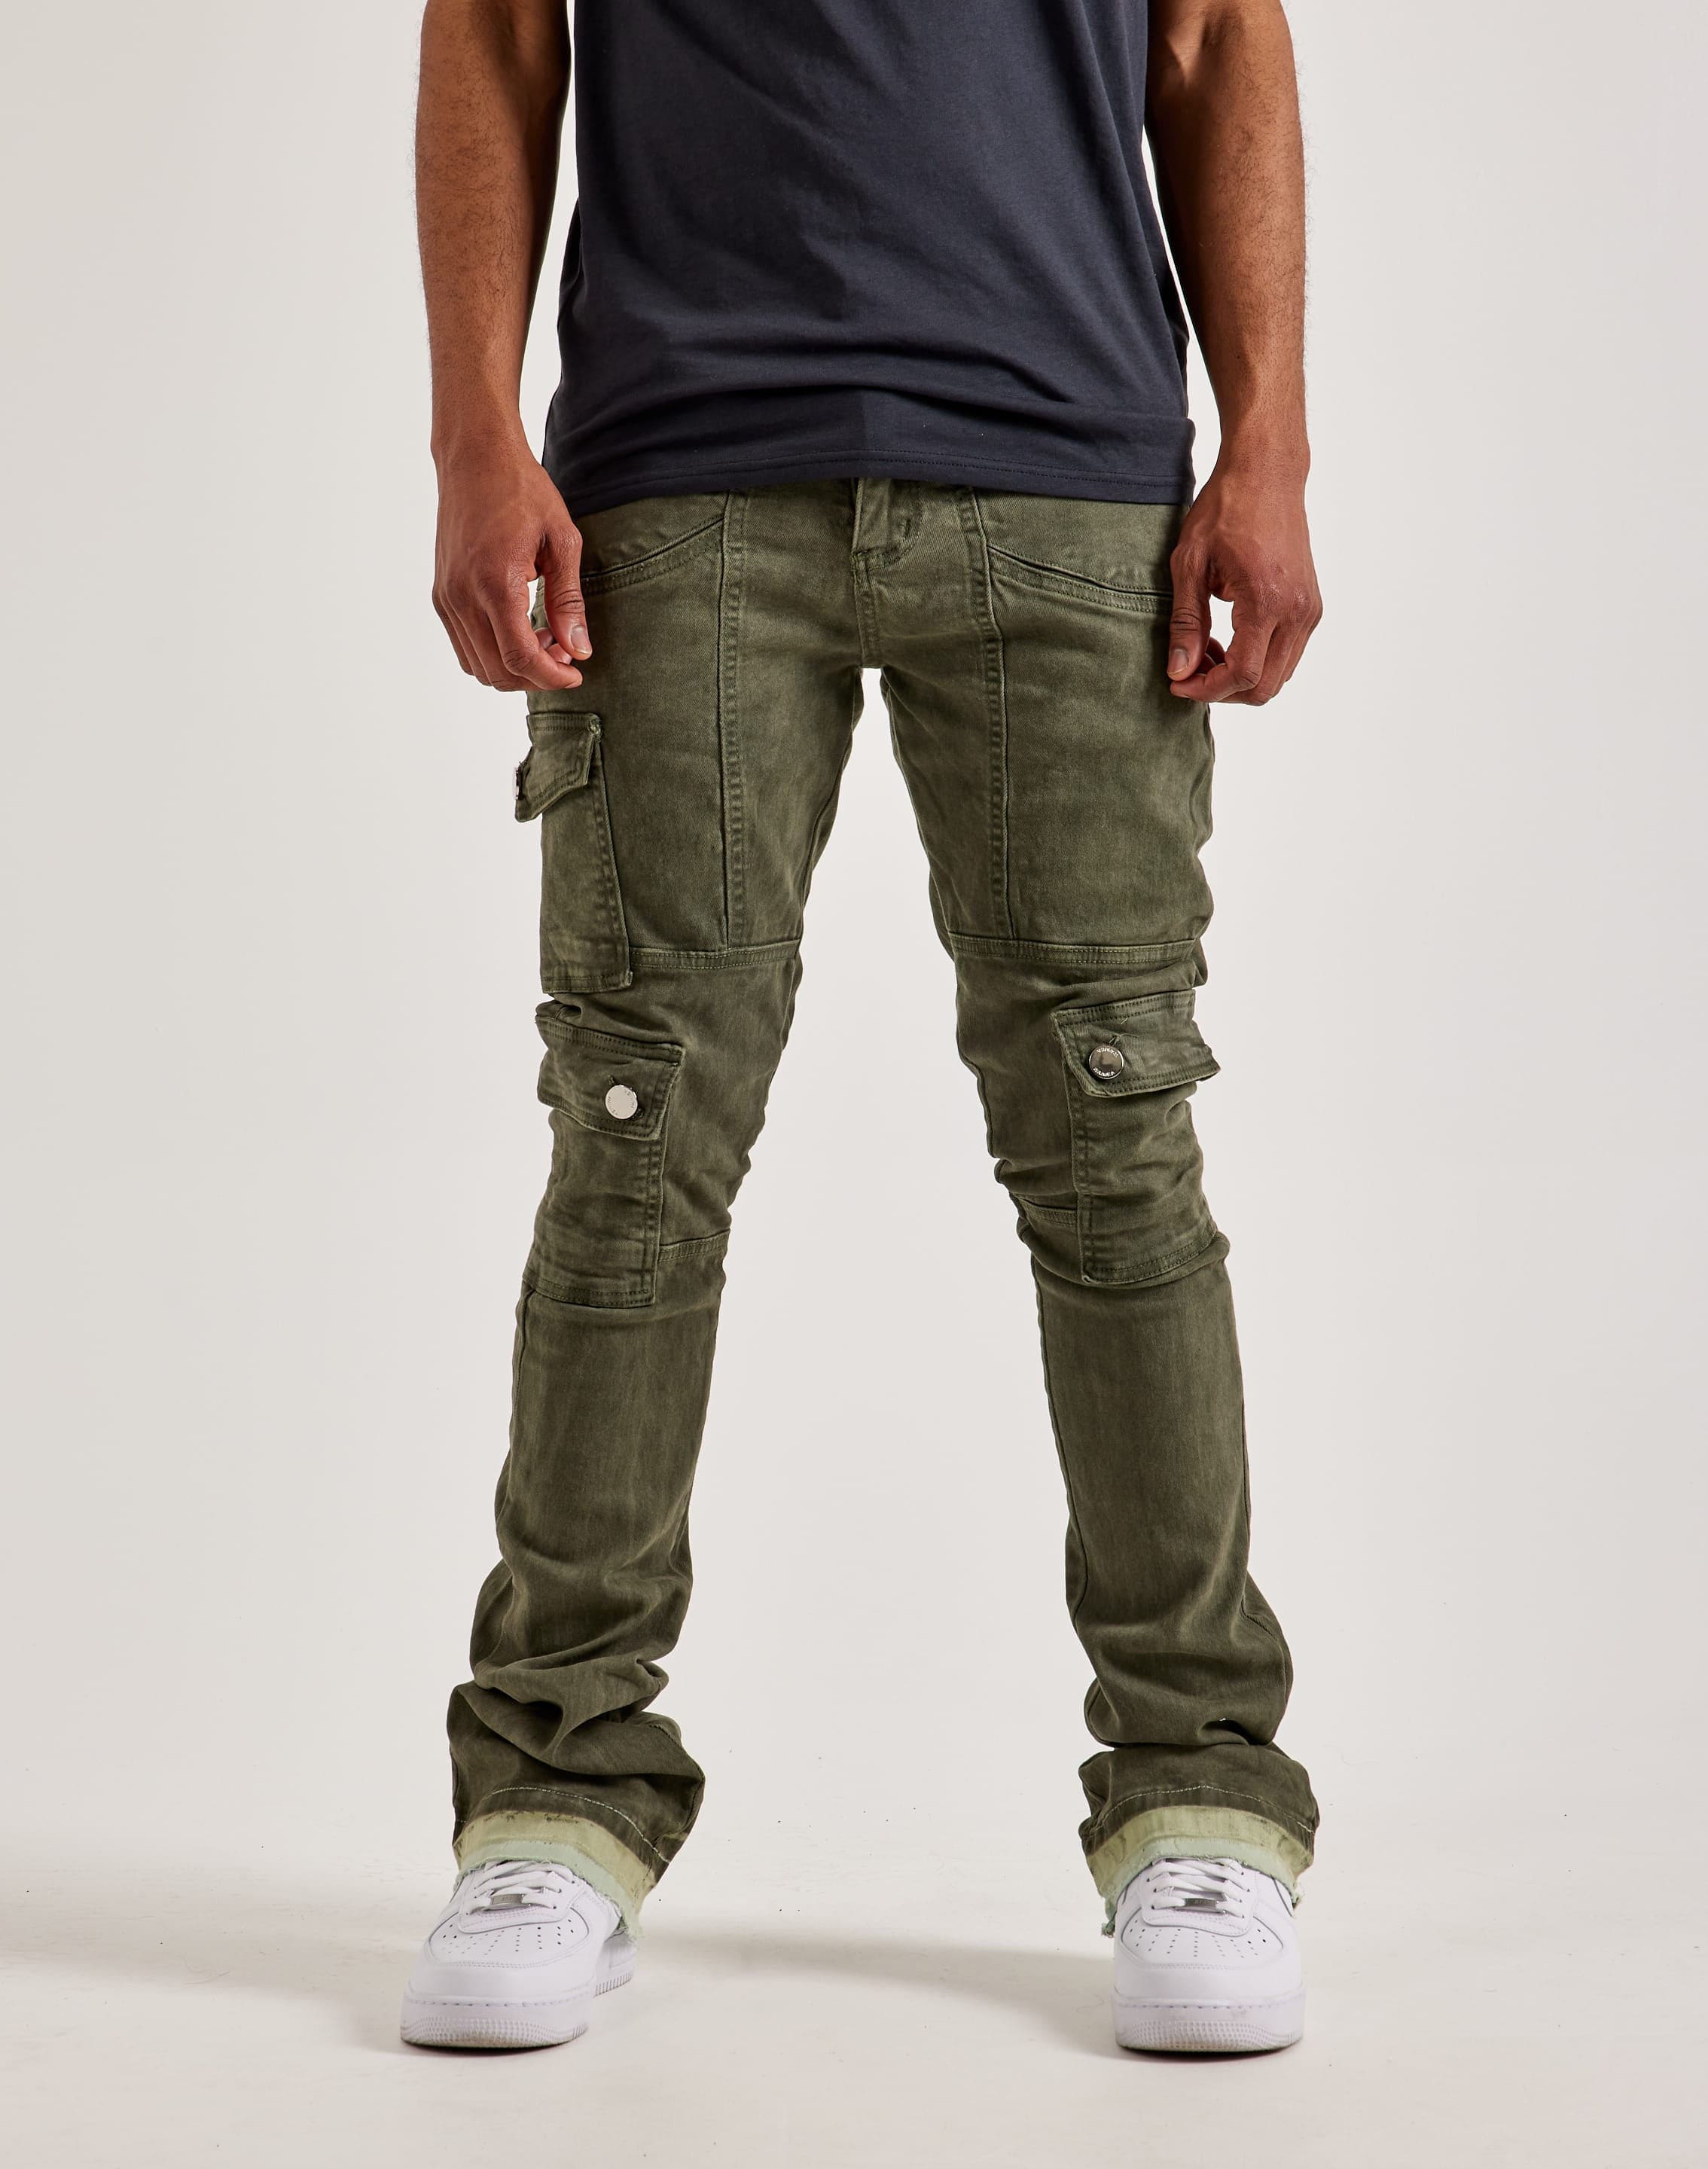 Buy PU Stacked Cargo Pants Men's Jeans & Pants from Waimea. Find Waimea  fashion & more at DrJays.com